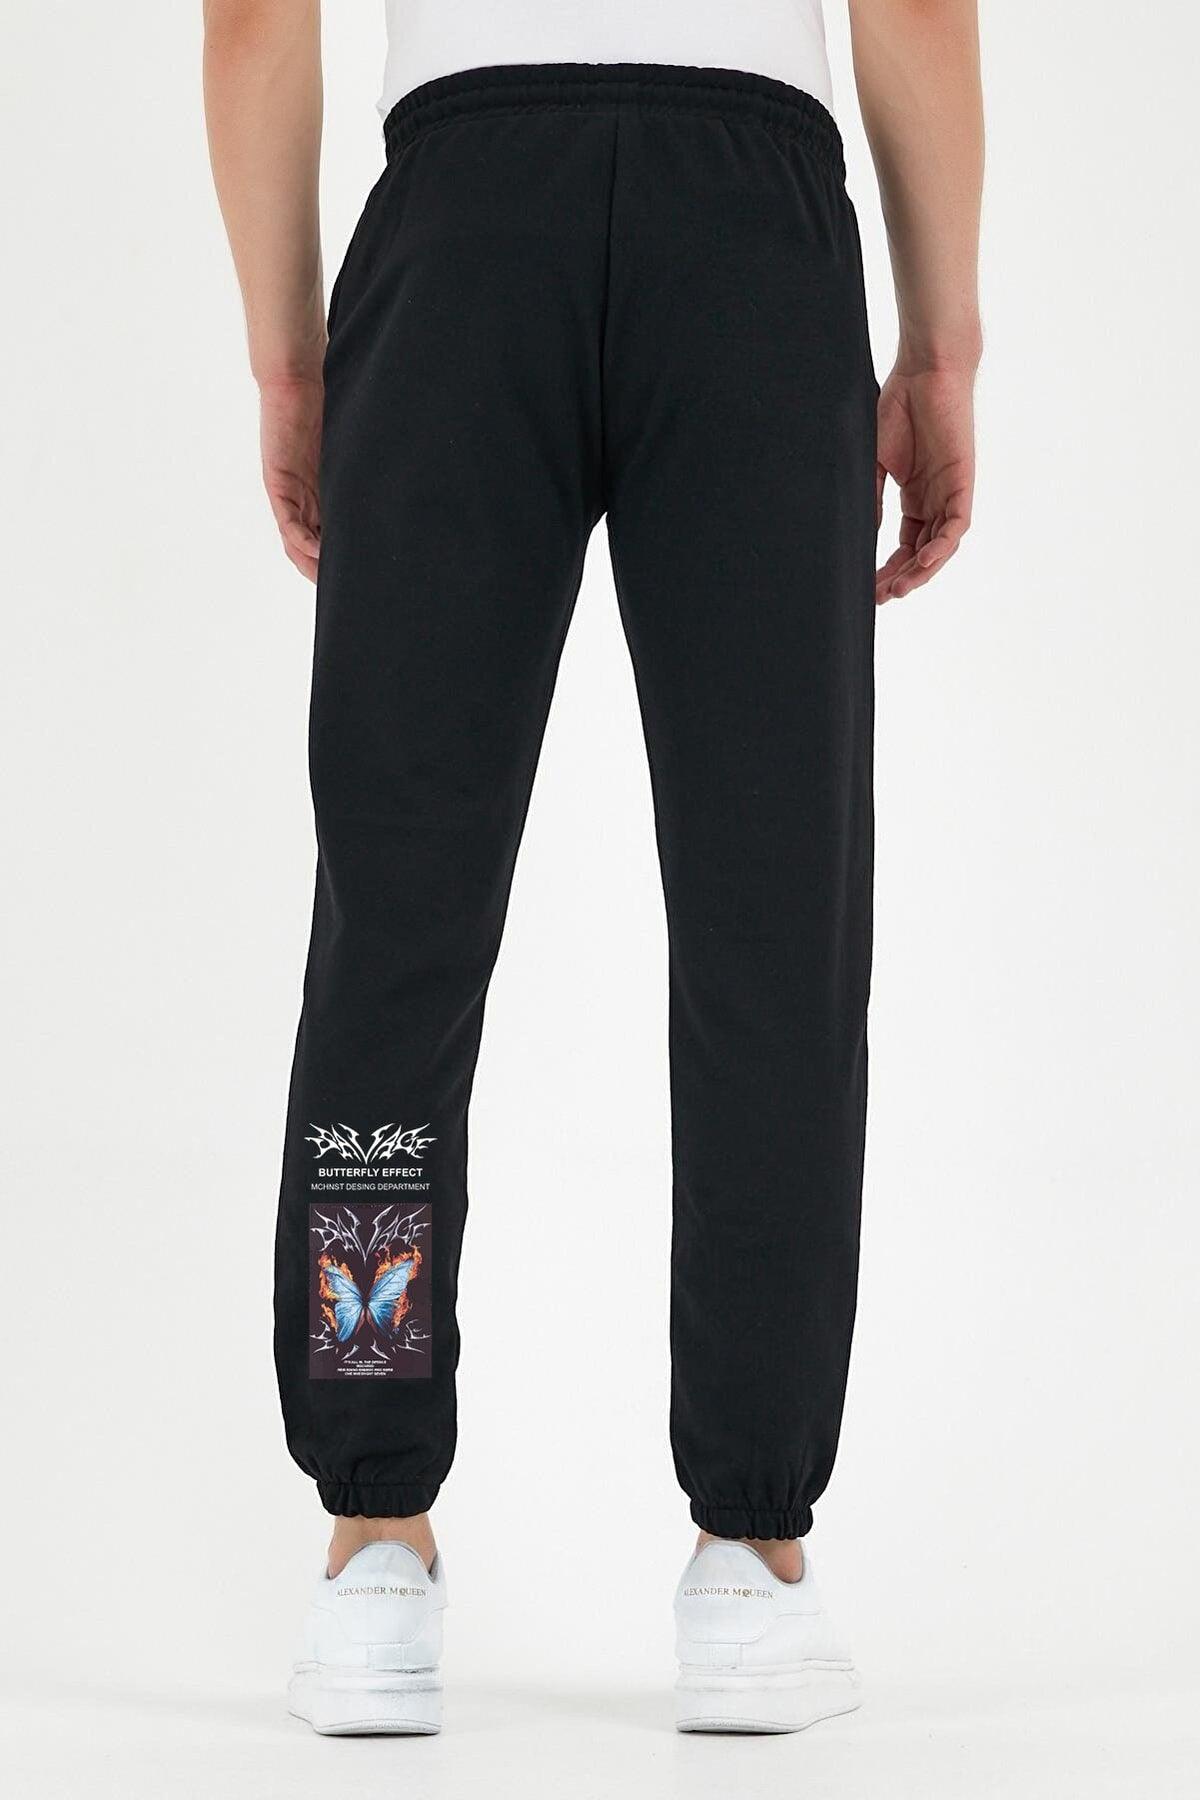 Black Unisex Butterfly Printed Jogger Sweatpants - Swordslife